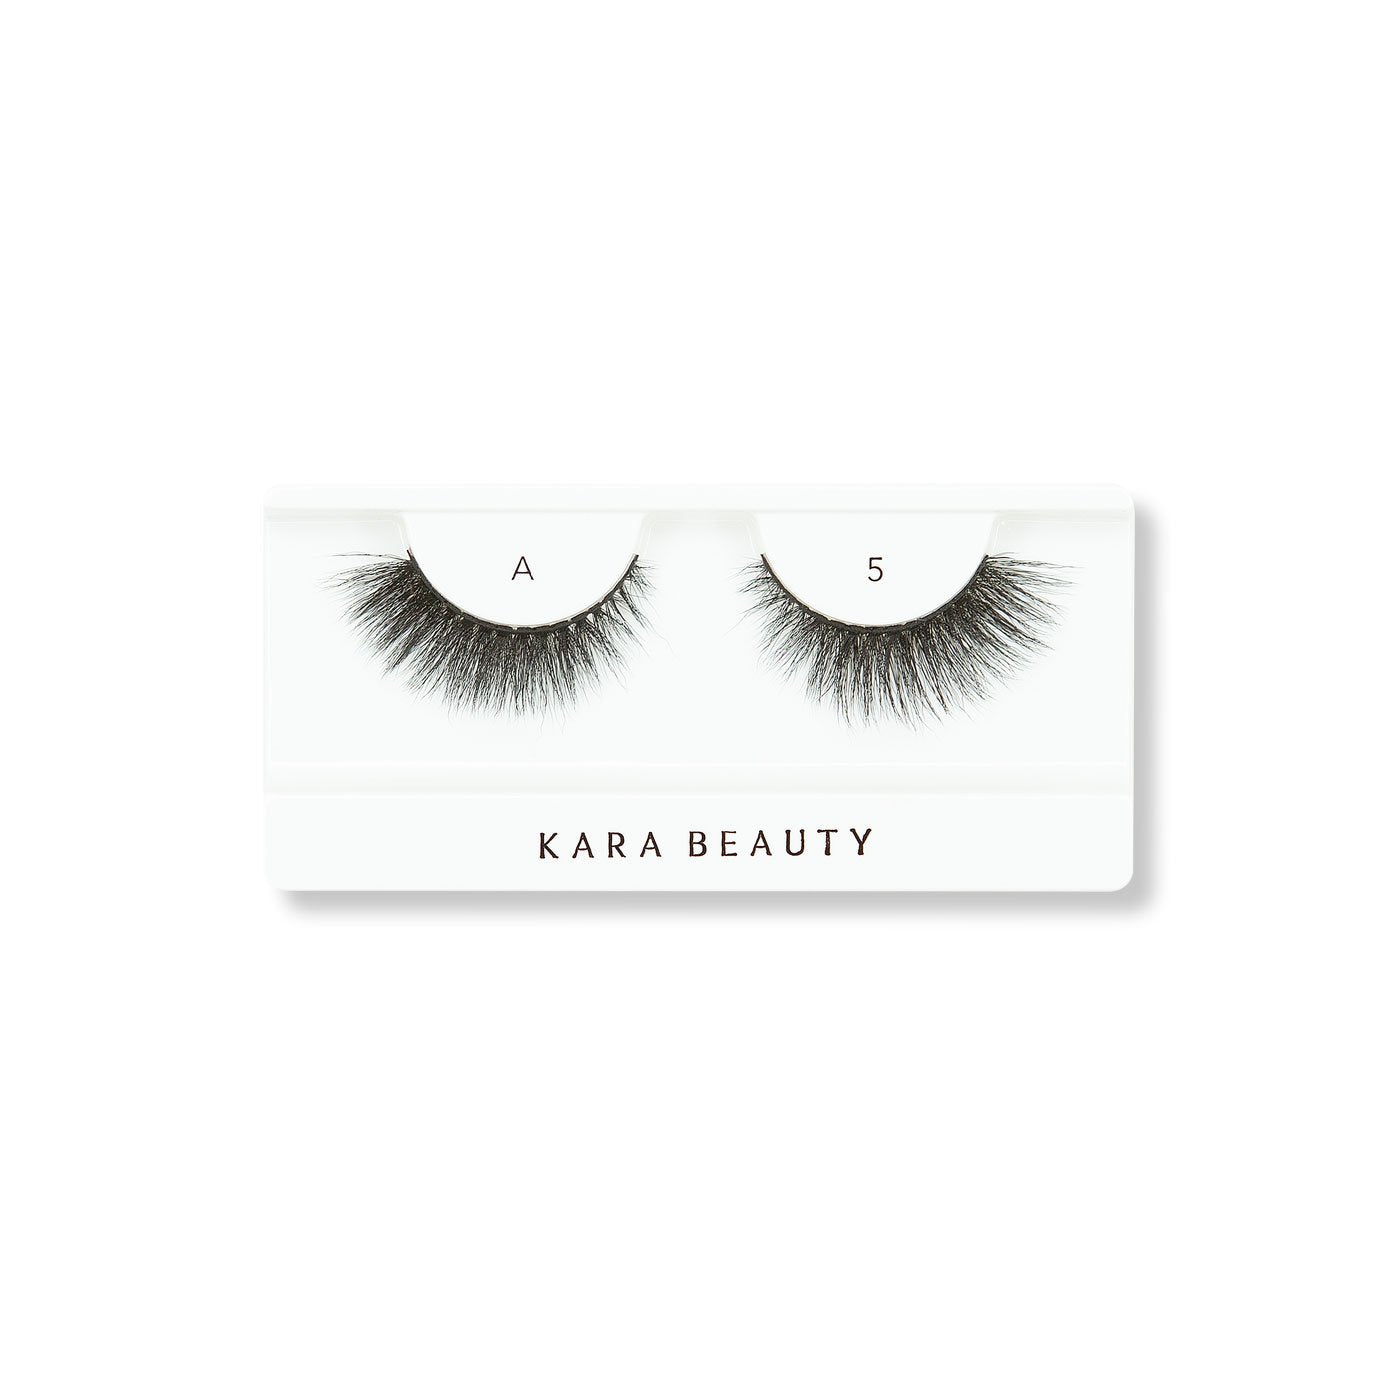 Kara Beauty Fabulashes 3D Faux Mink Lashes  style #A5 on tray